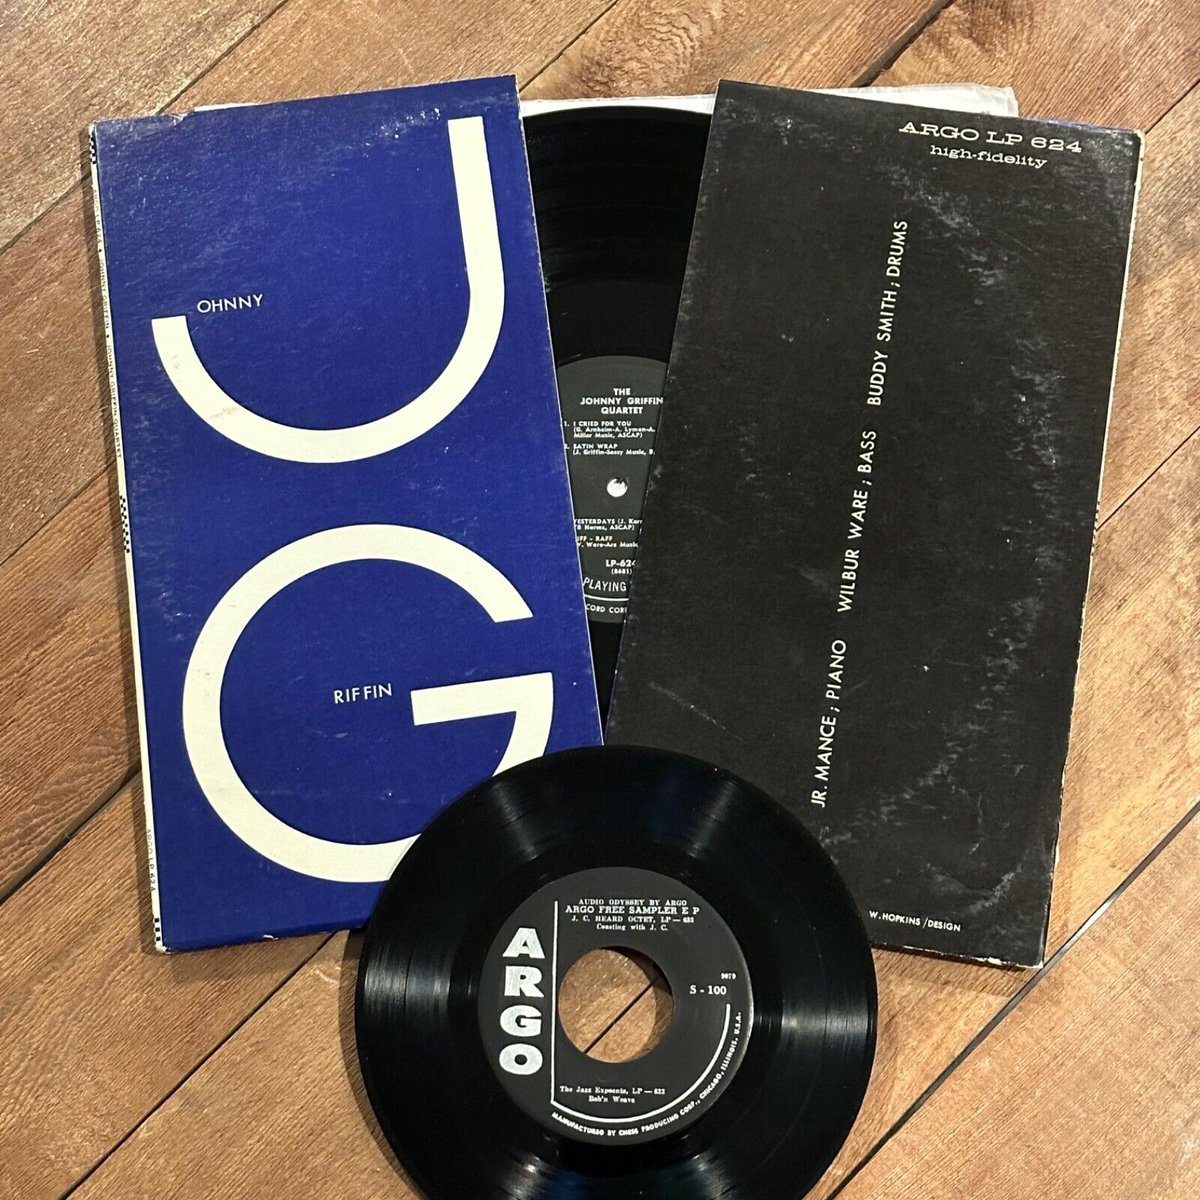 archived! $ 556 | Johnny Griffin Quartet Nice Rare 1st Kangaroo Split Pak Argo Lp 624 #vinyl popsike.com/johnny-griffin…